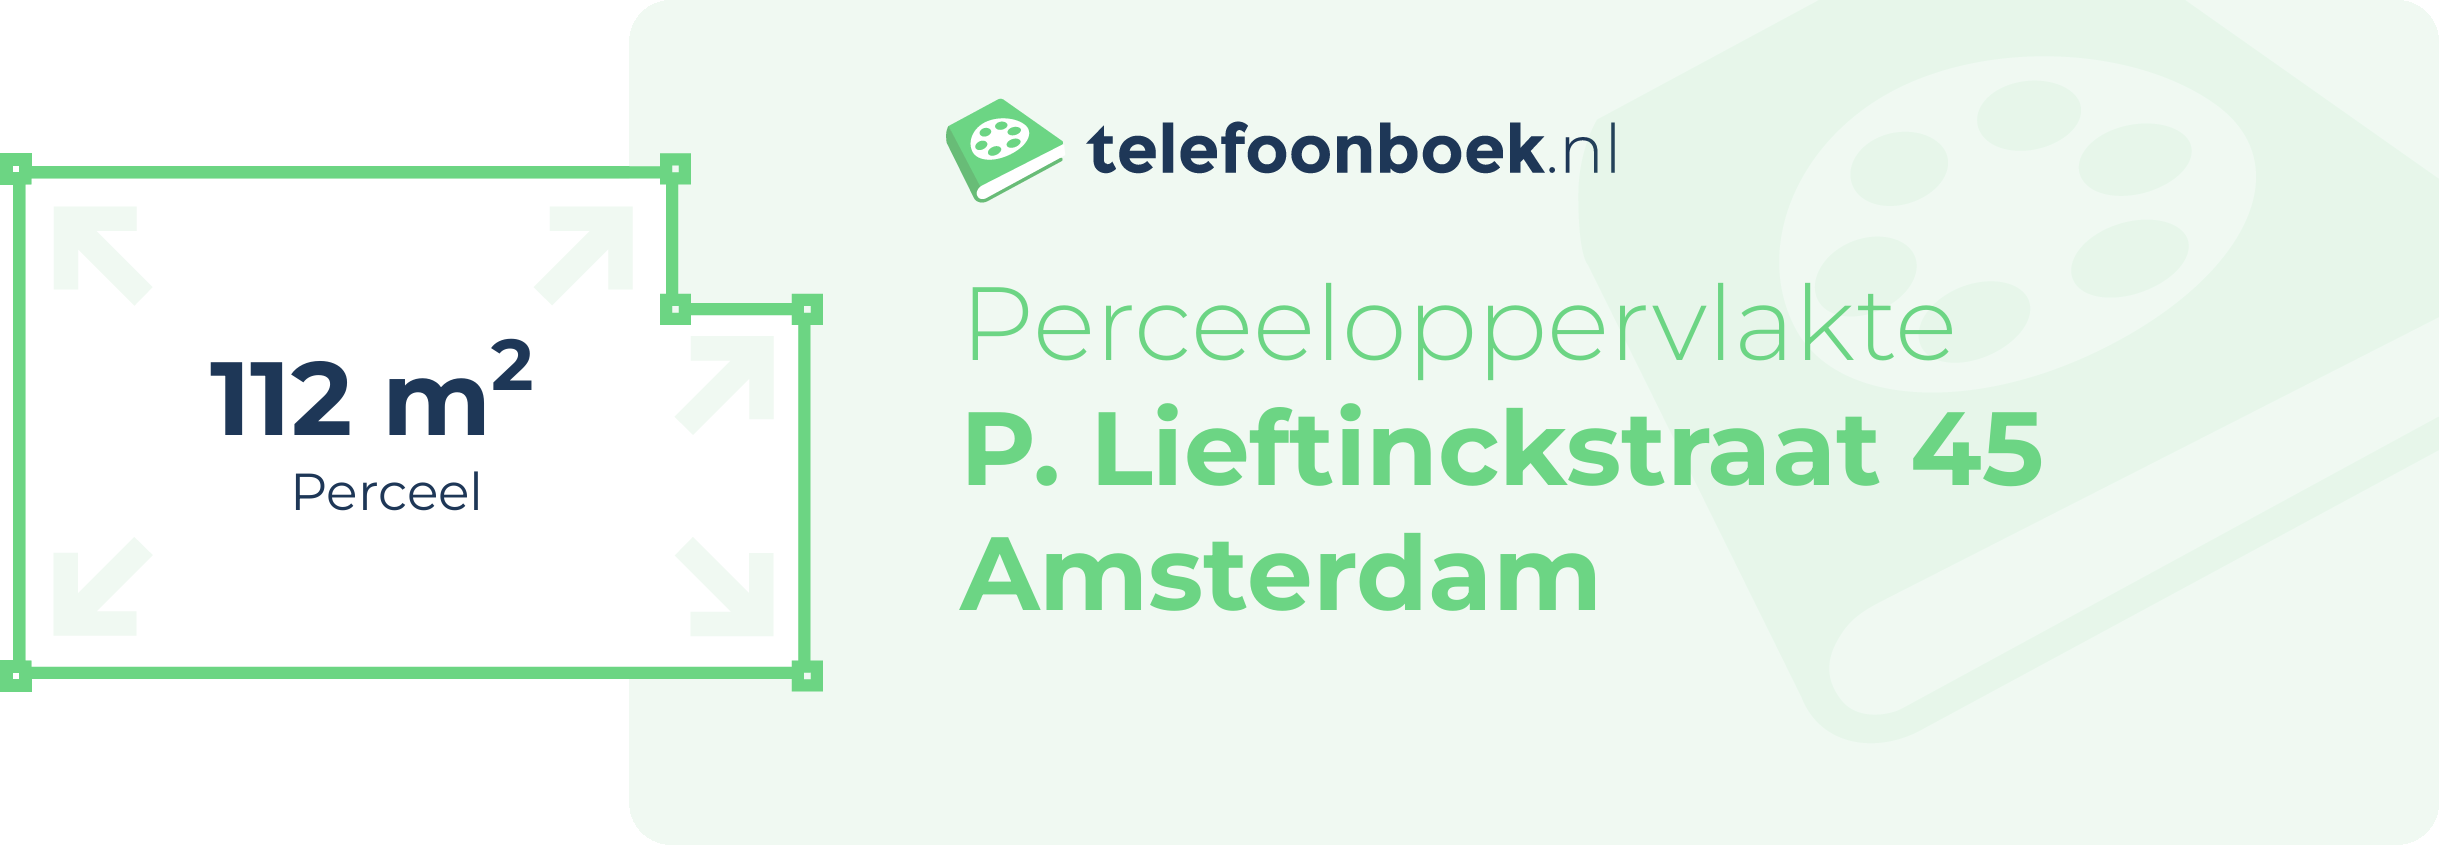 Perceeloppervlakte P. Lieftinckstraat 45 Amsterdam